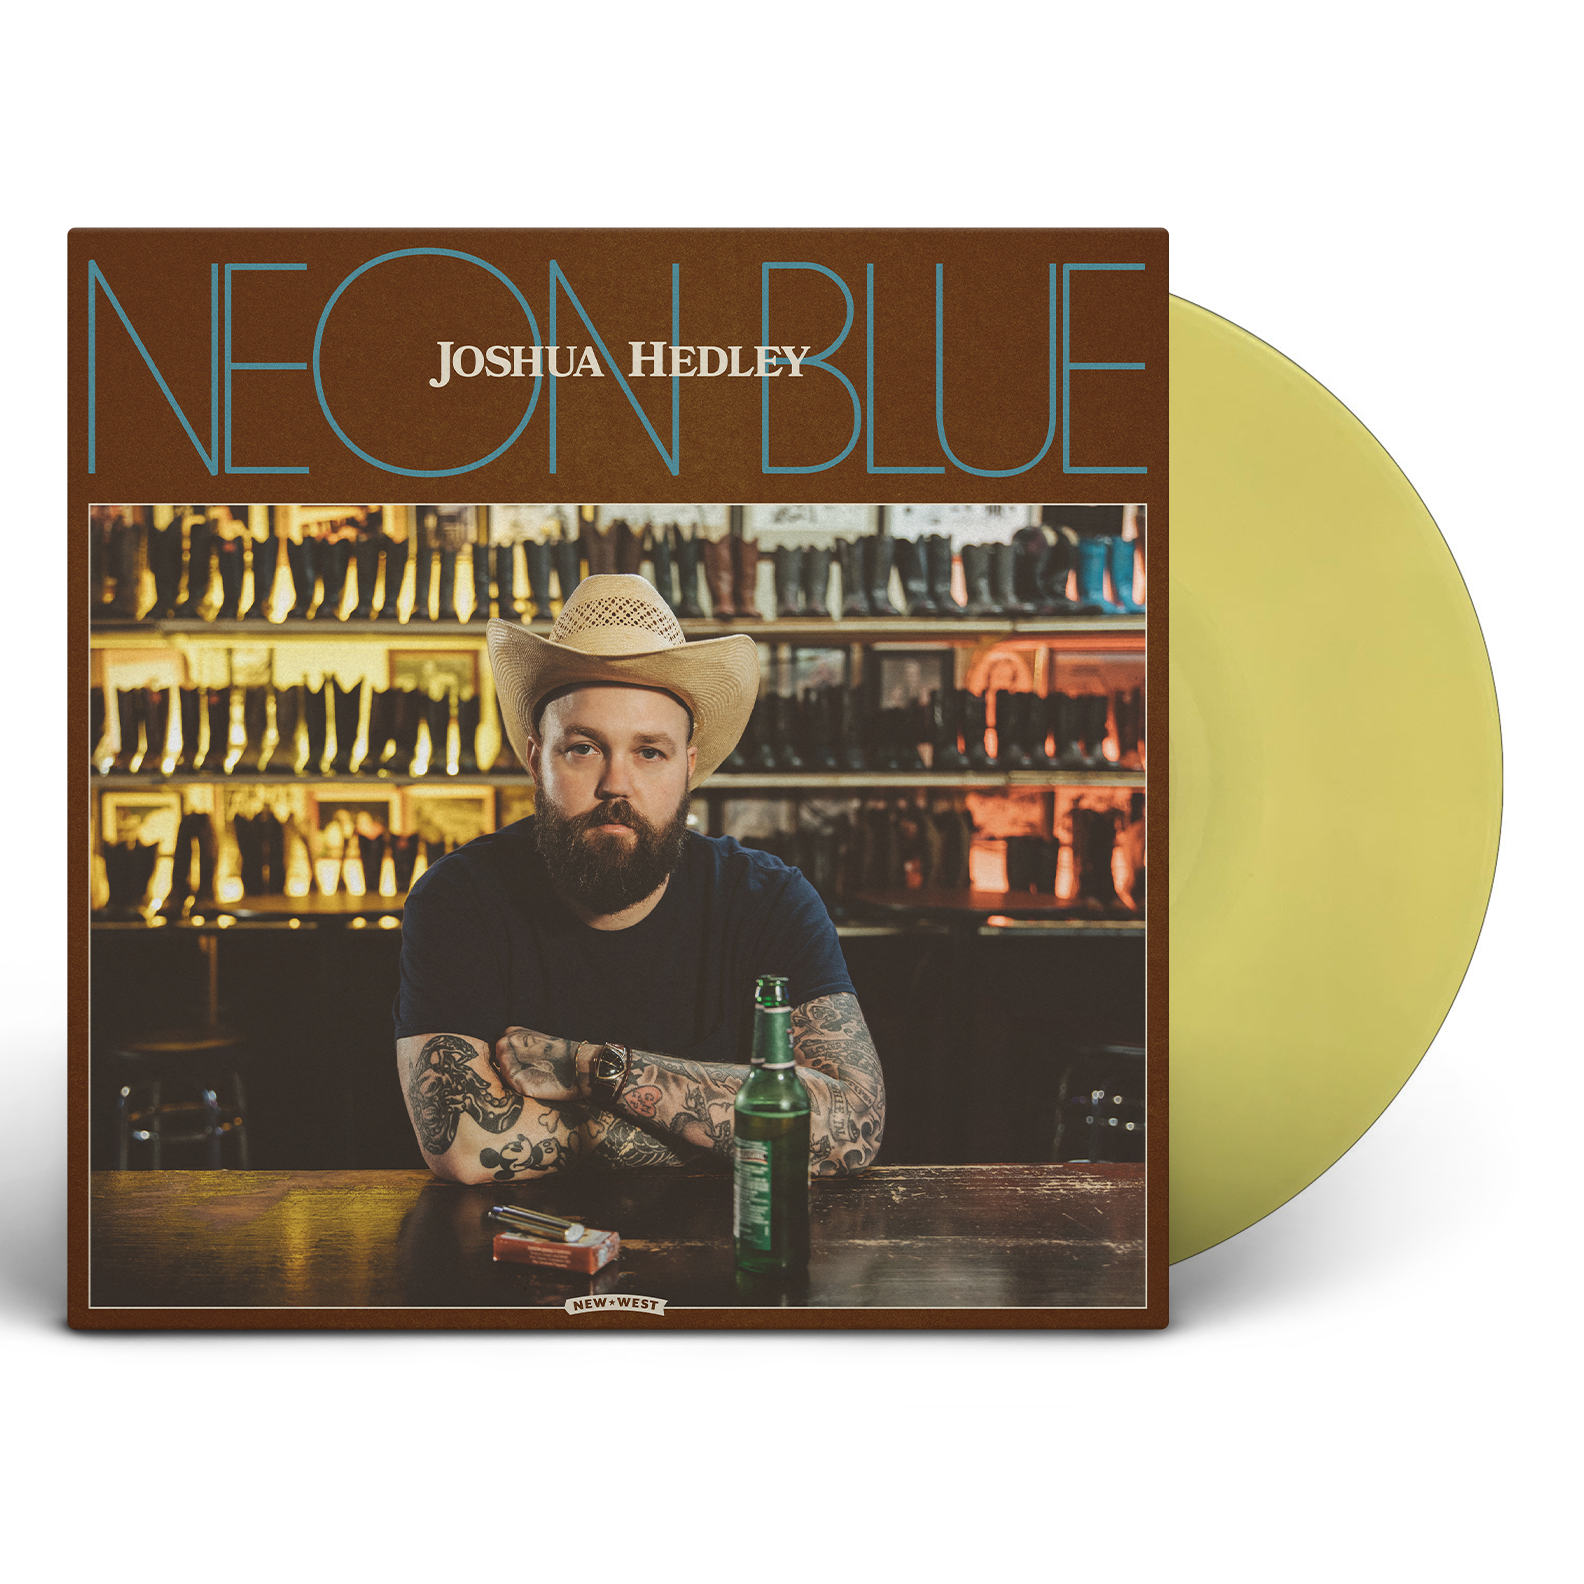 Joshua Hedley - Neon Blue [Cyber Monday Exclusive Color Vinyl]